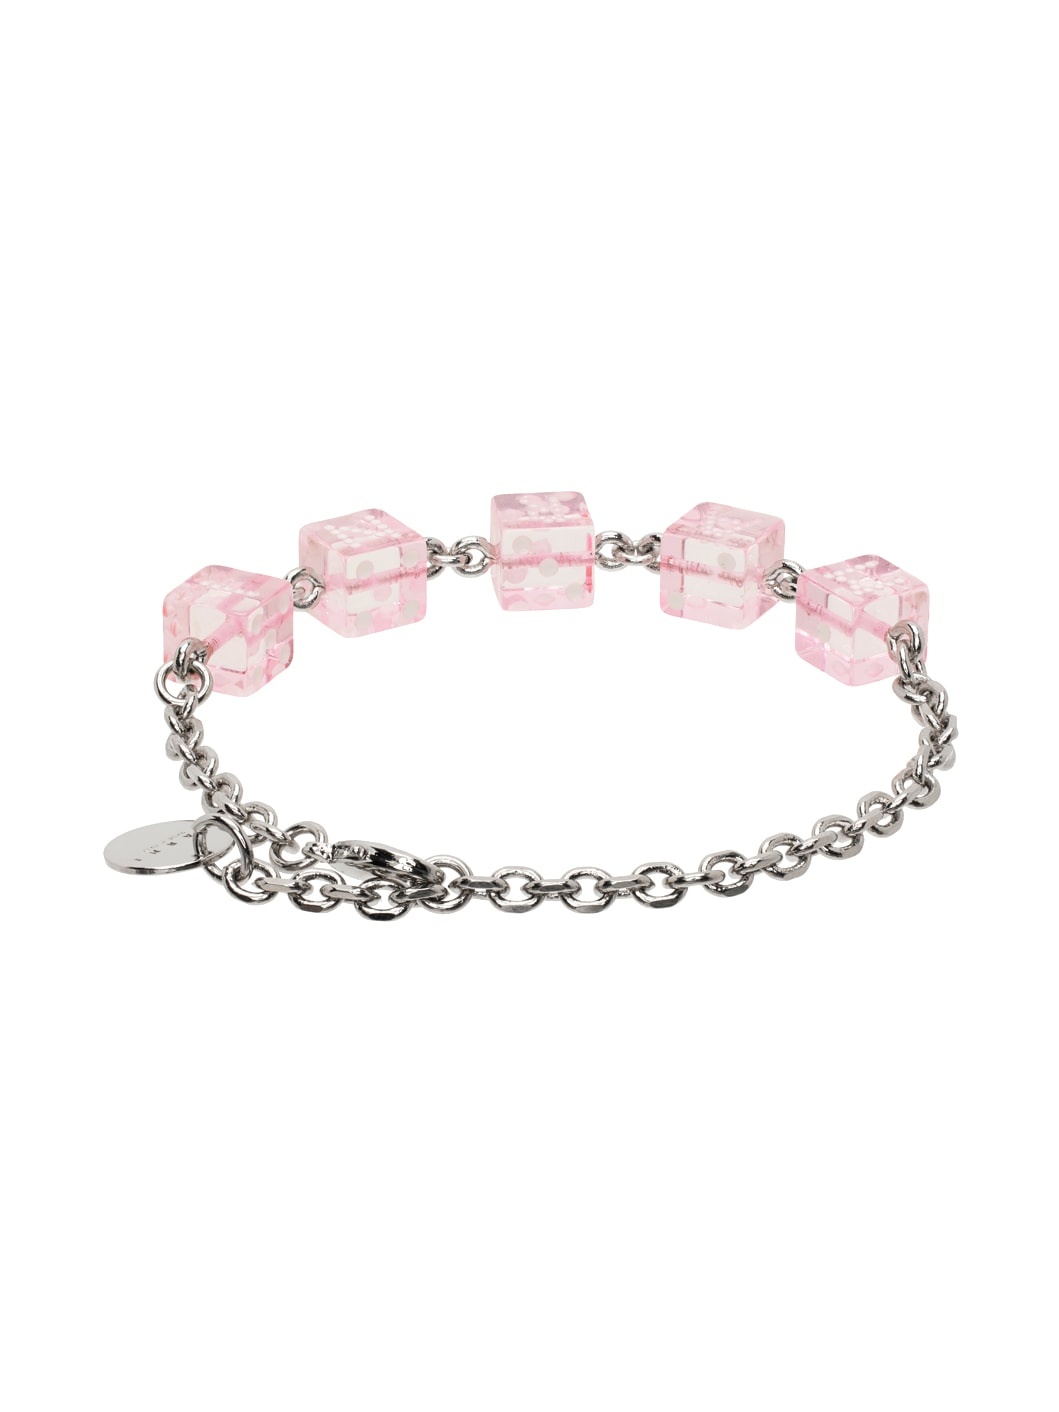 Silver & Pink Dice Charm Bracelet - 2